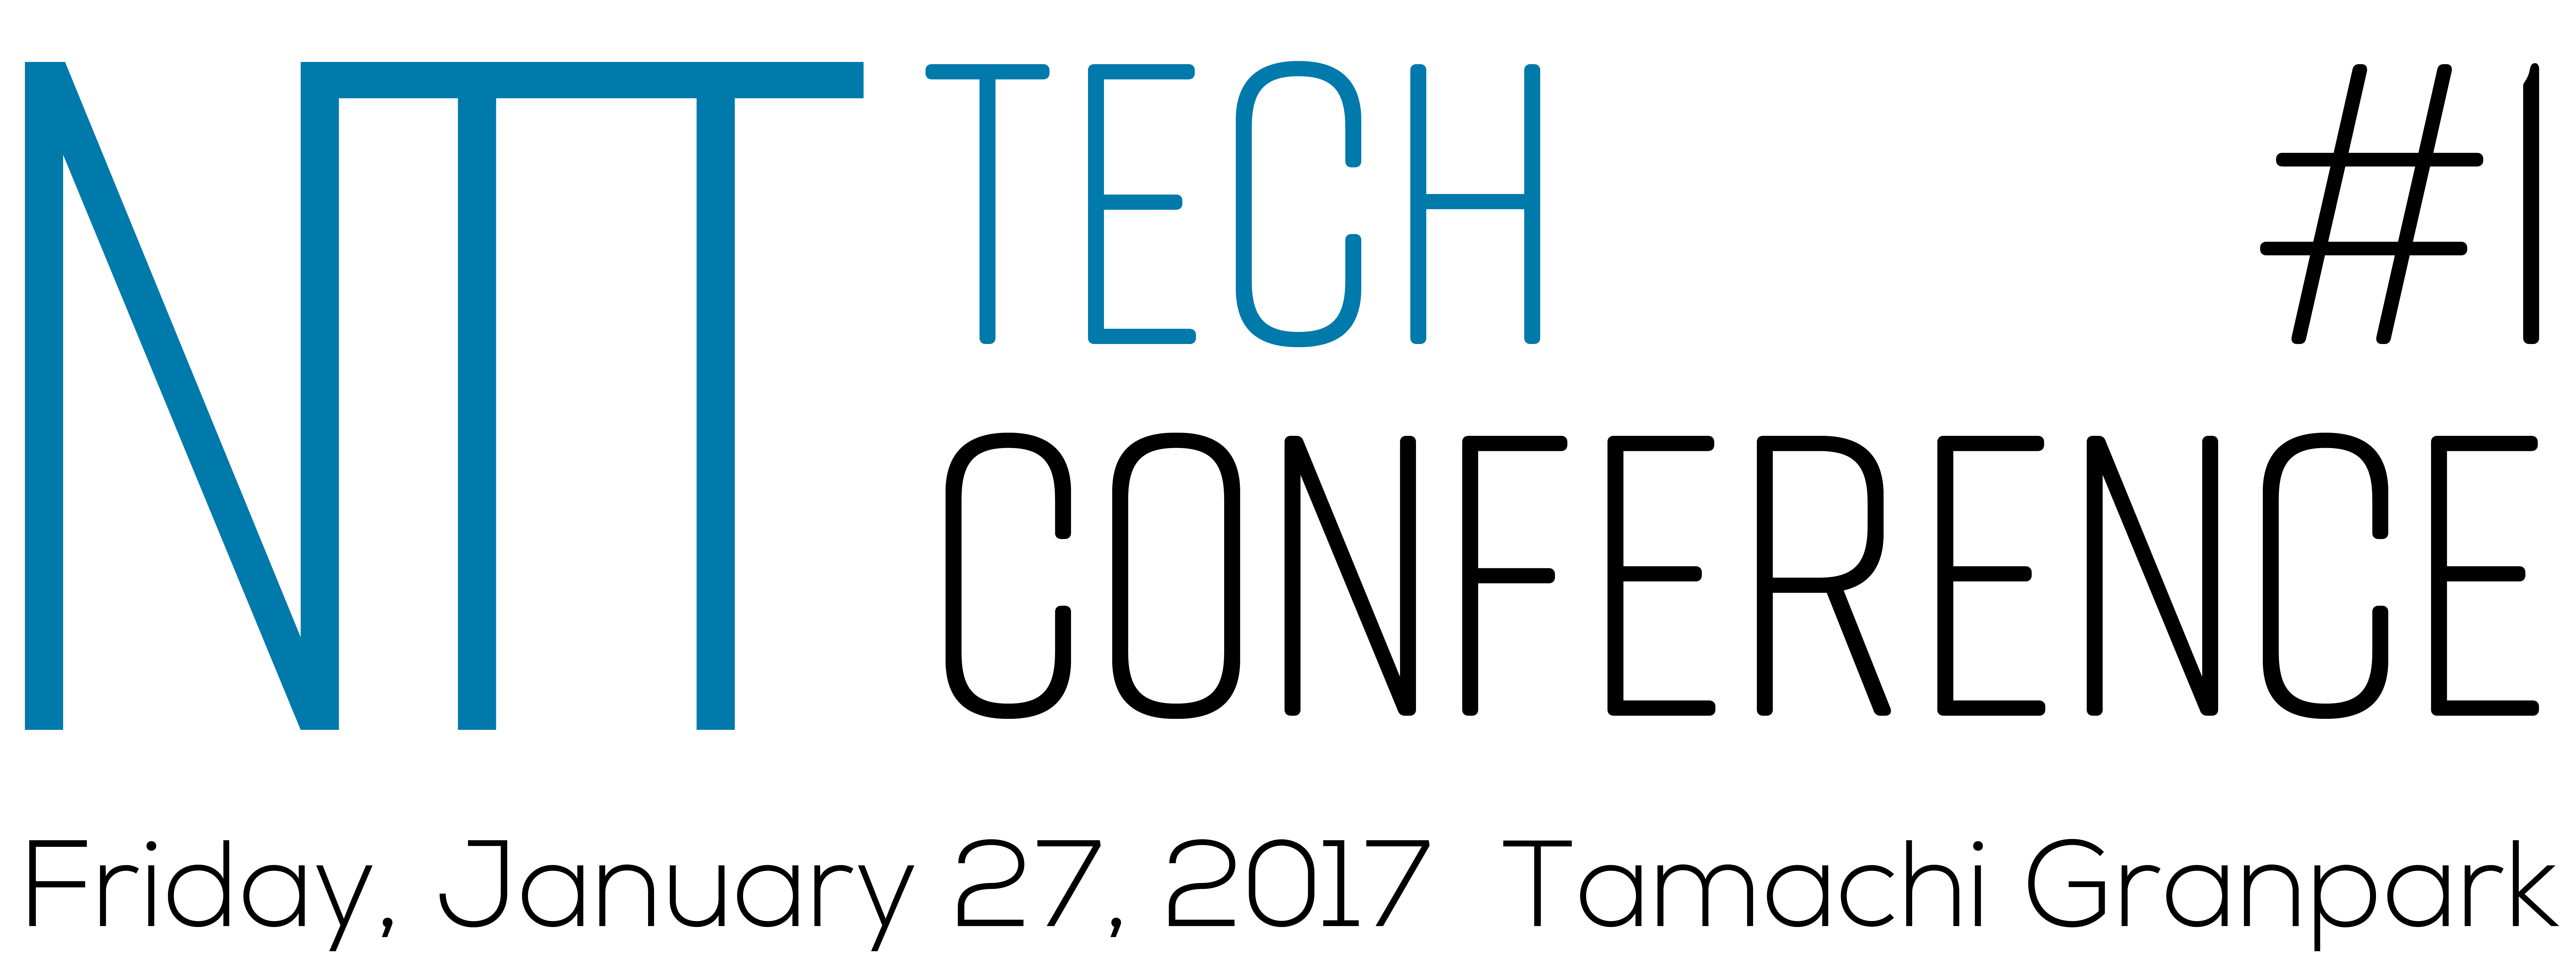 ntt-tech-logo.png